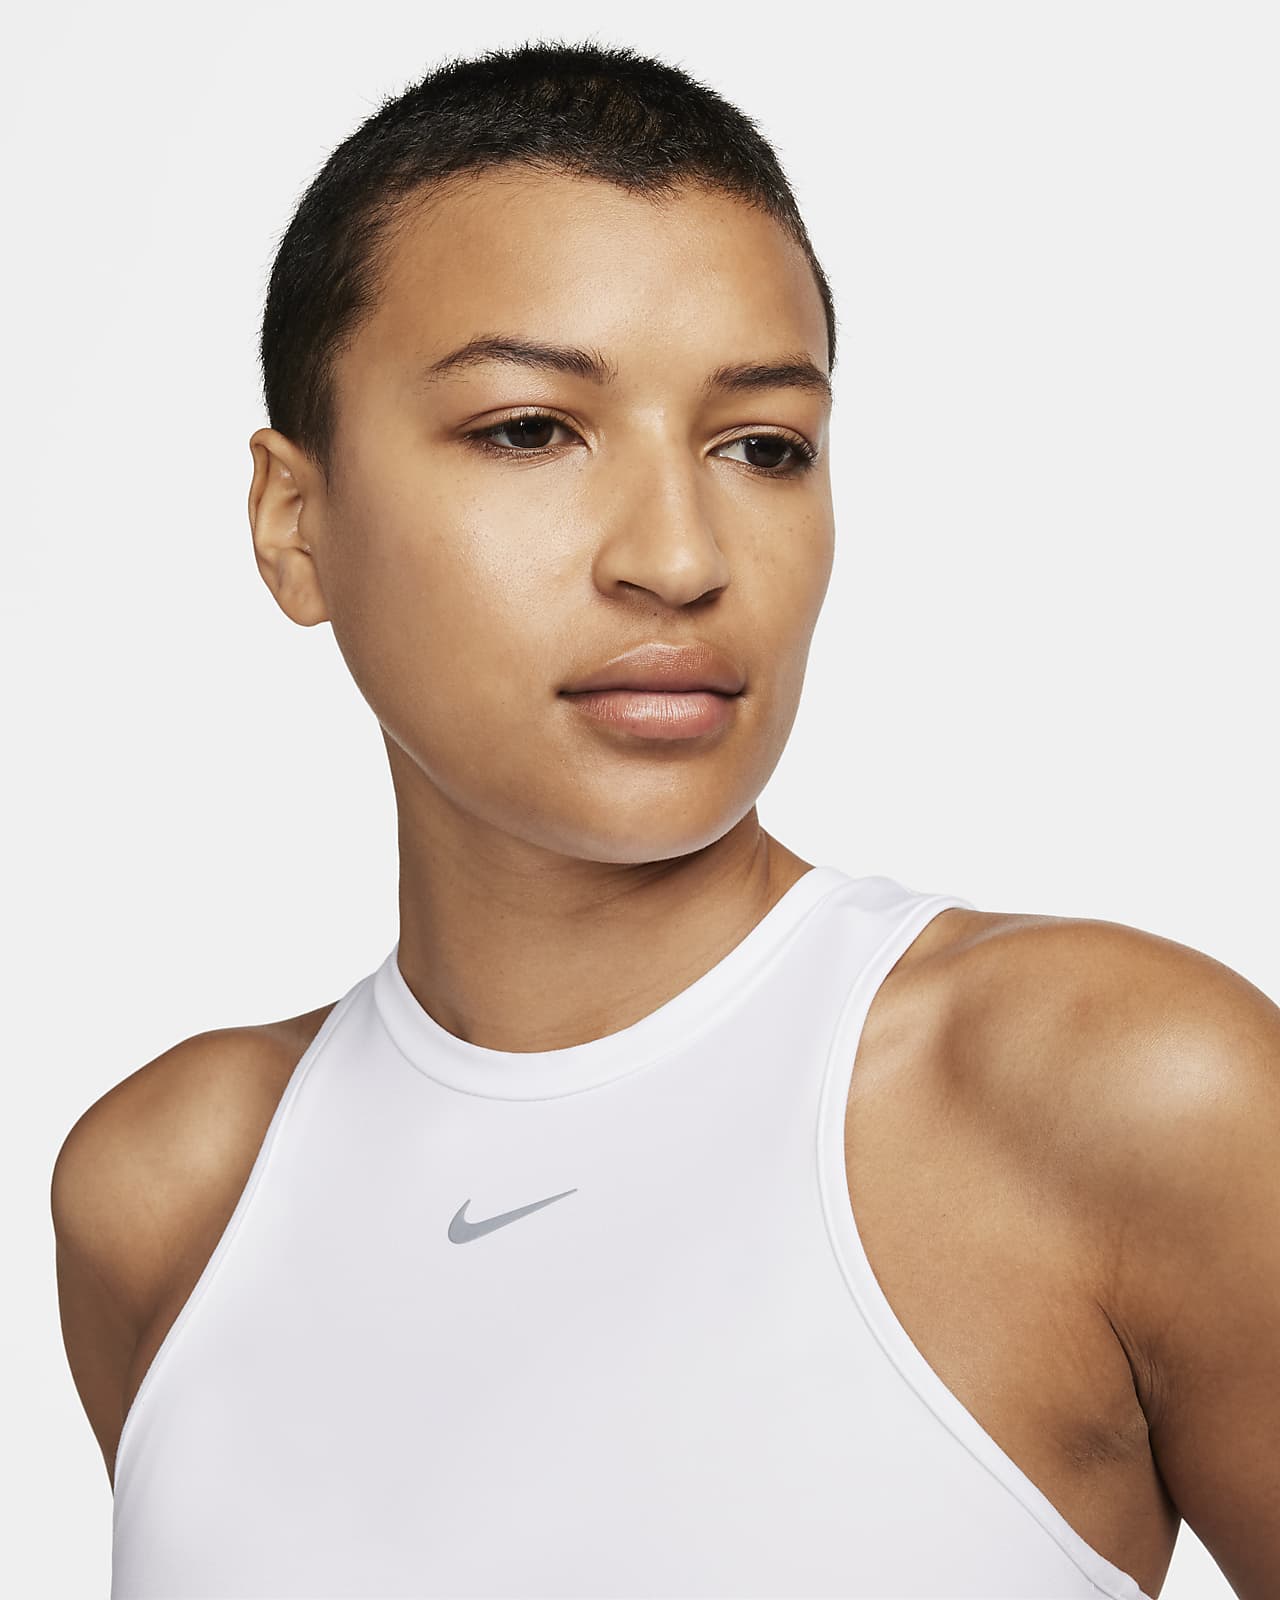 Nike Dri Fit Racer Back Tank Top Black Stripe Design Women's Size Small